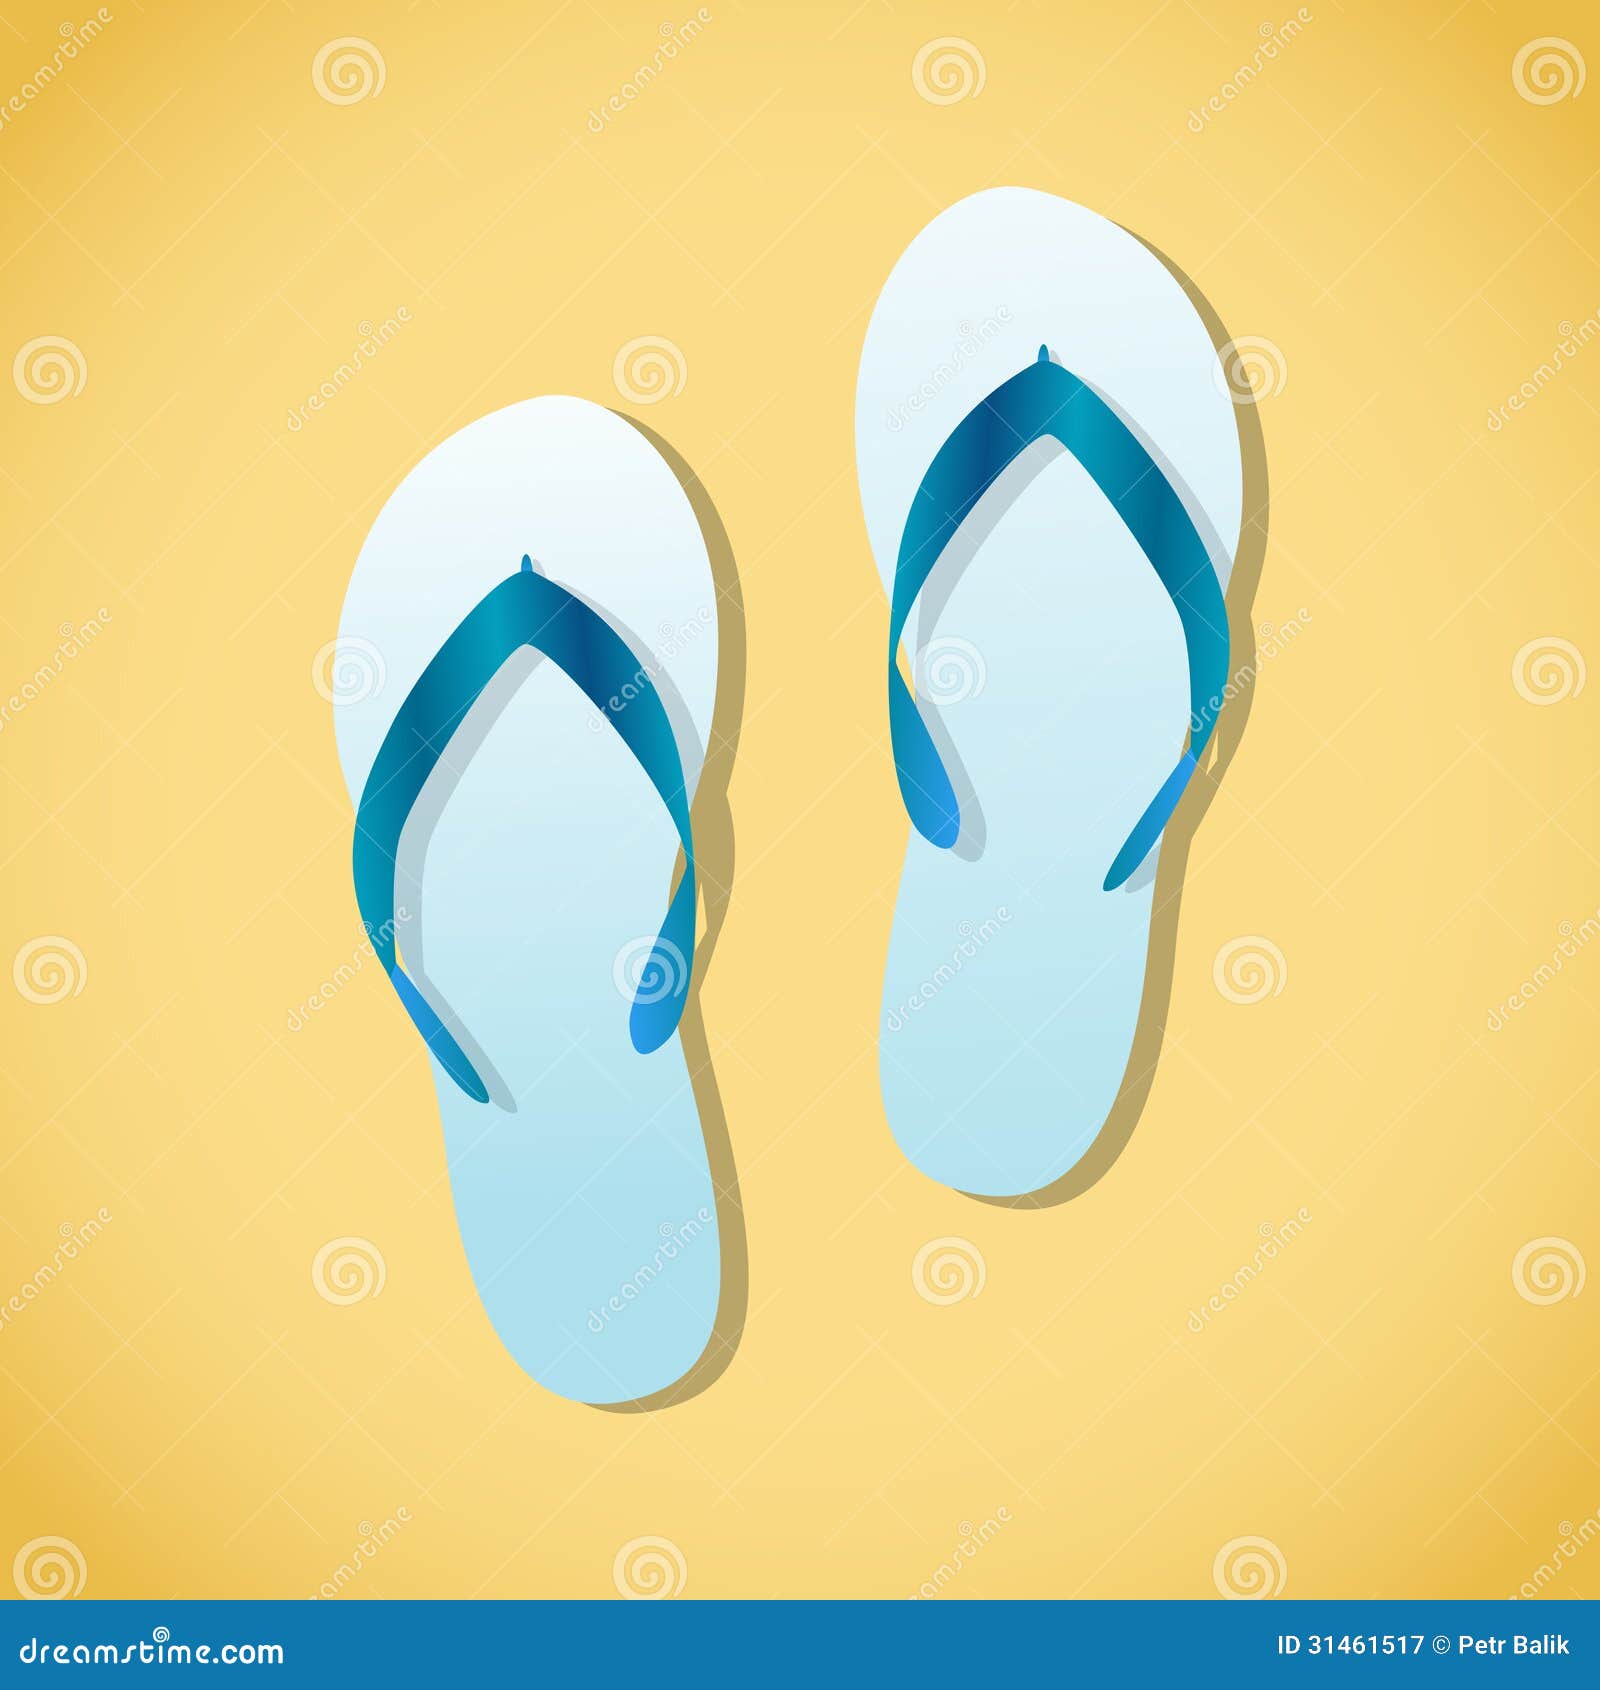 Sandals stock illustration. Illustration of isolated - 31461517